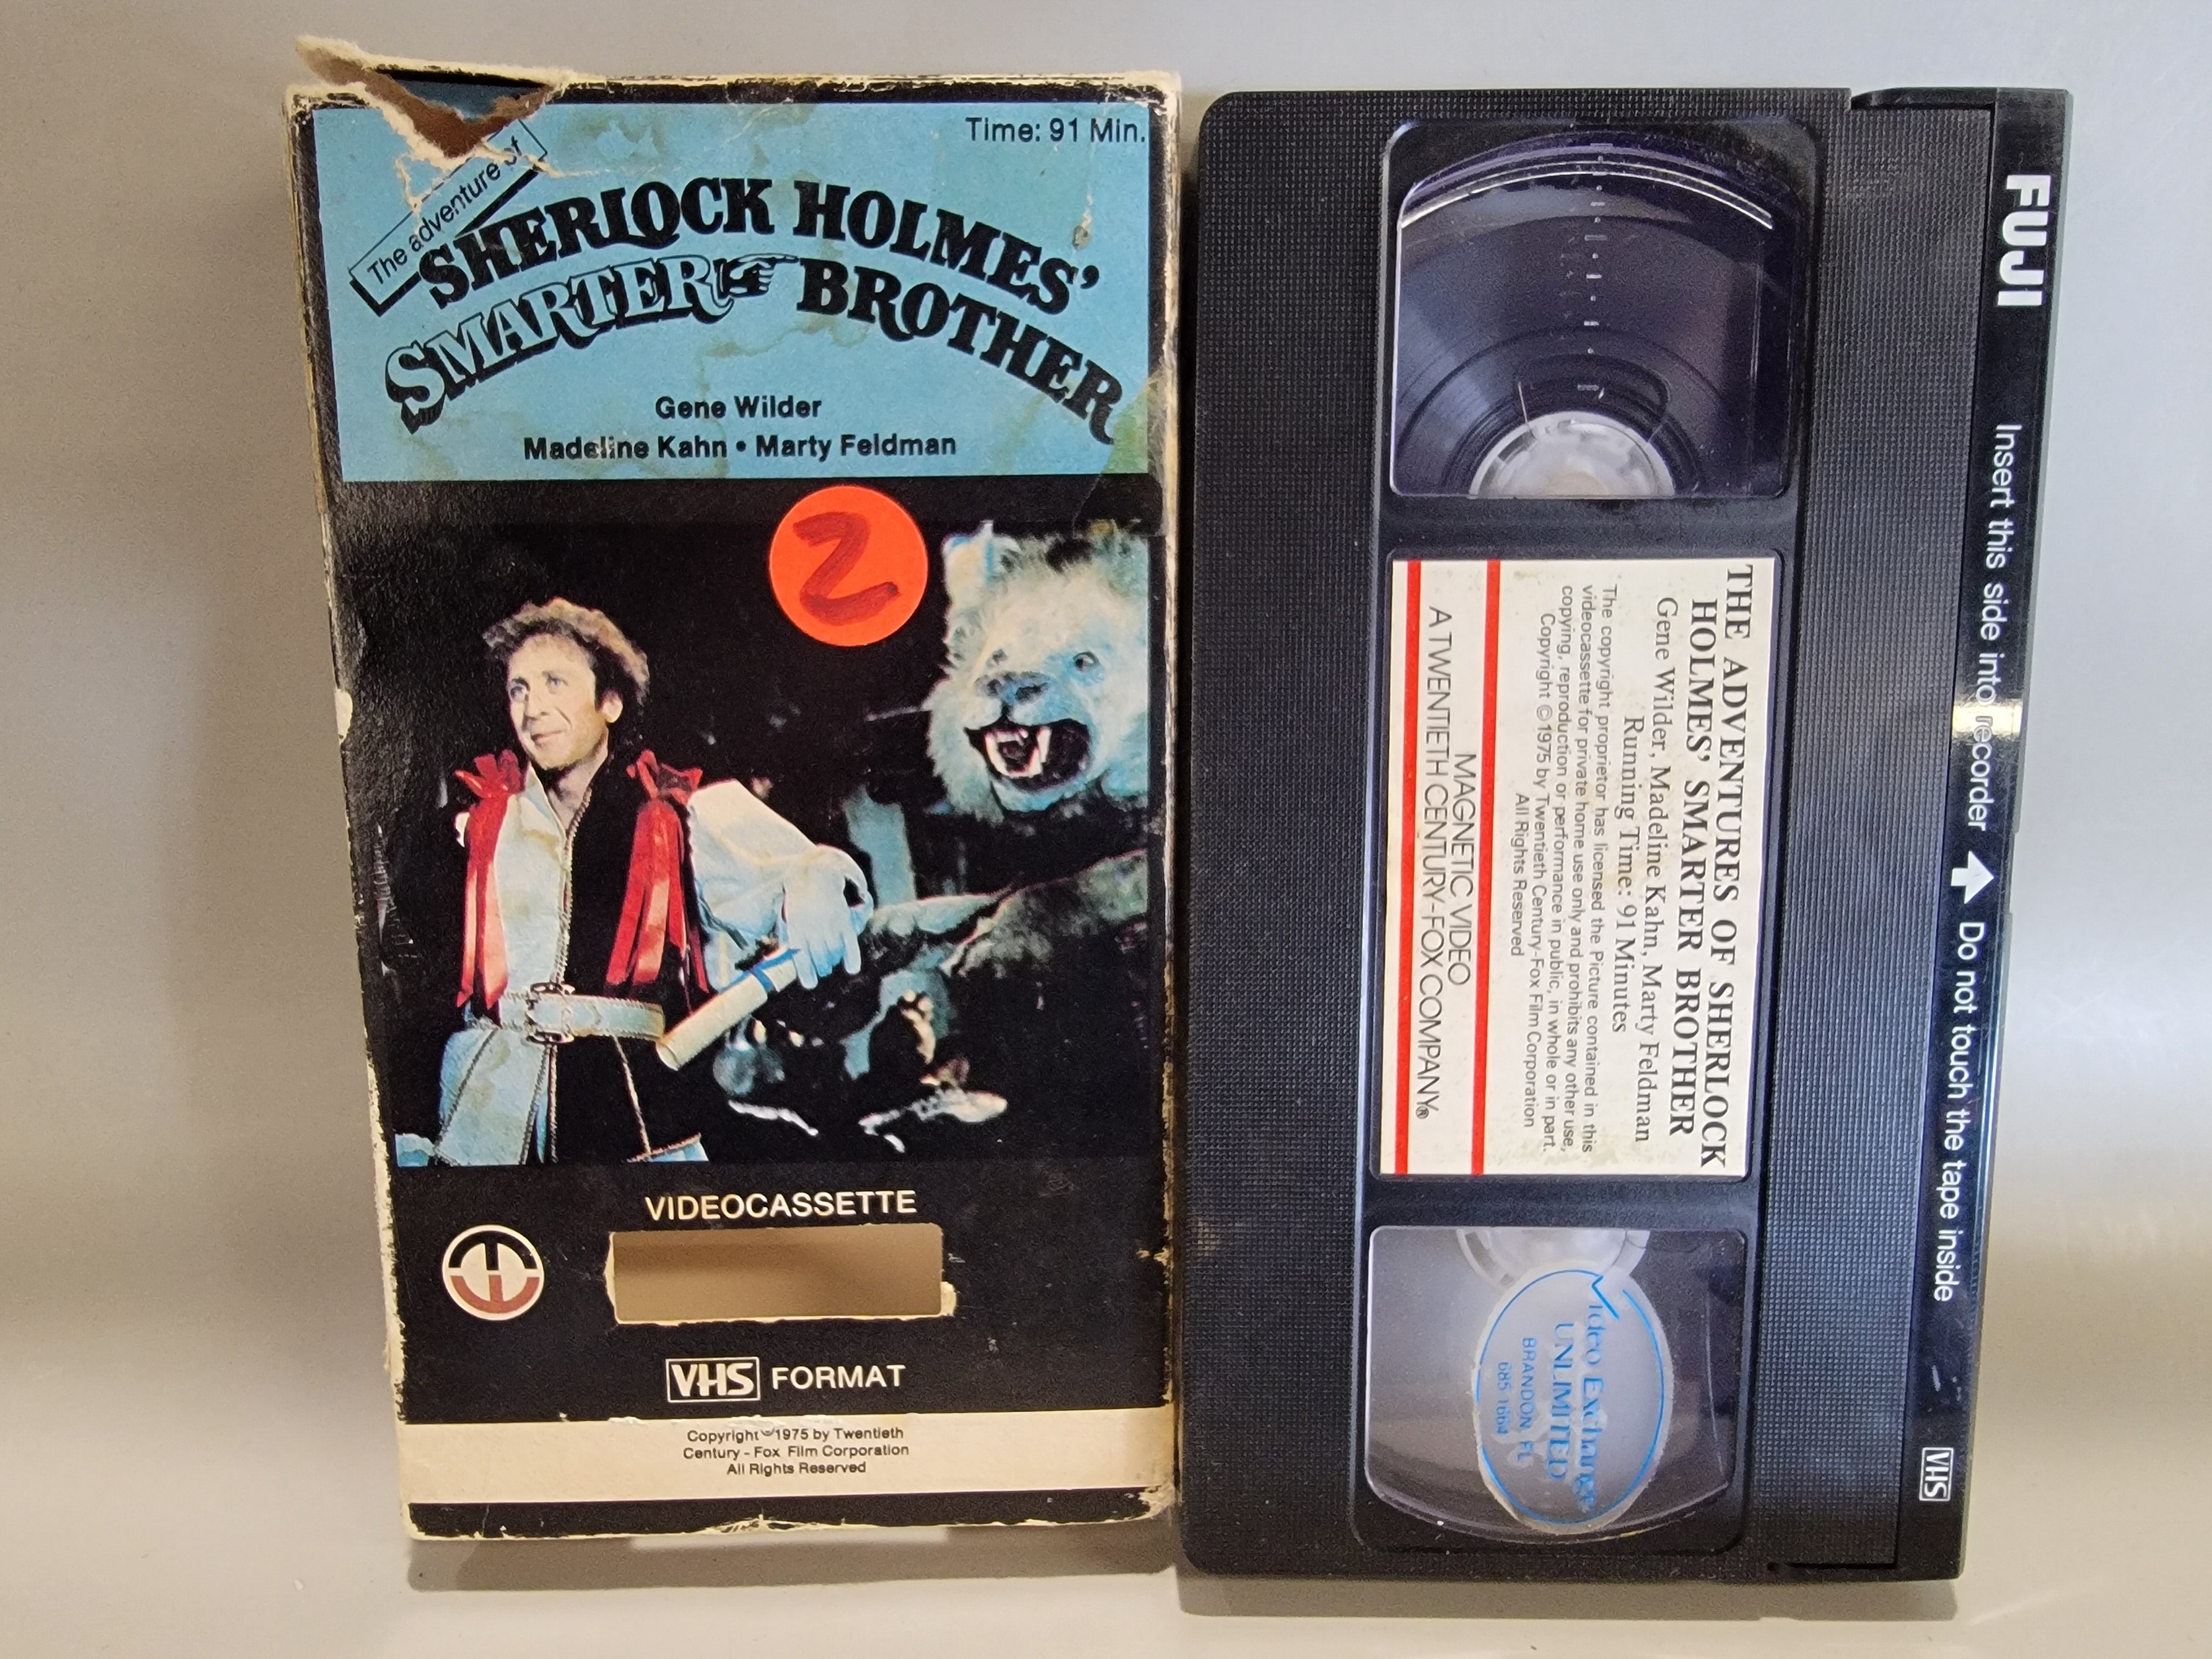 SHERLOCK HOLMES' SMARTER BROTHER VHS [USED]